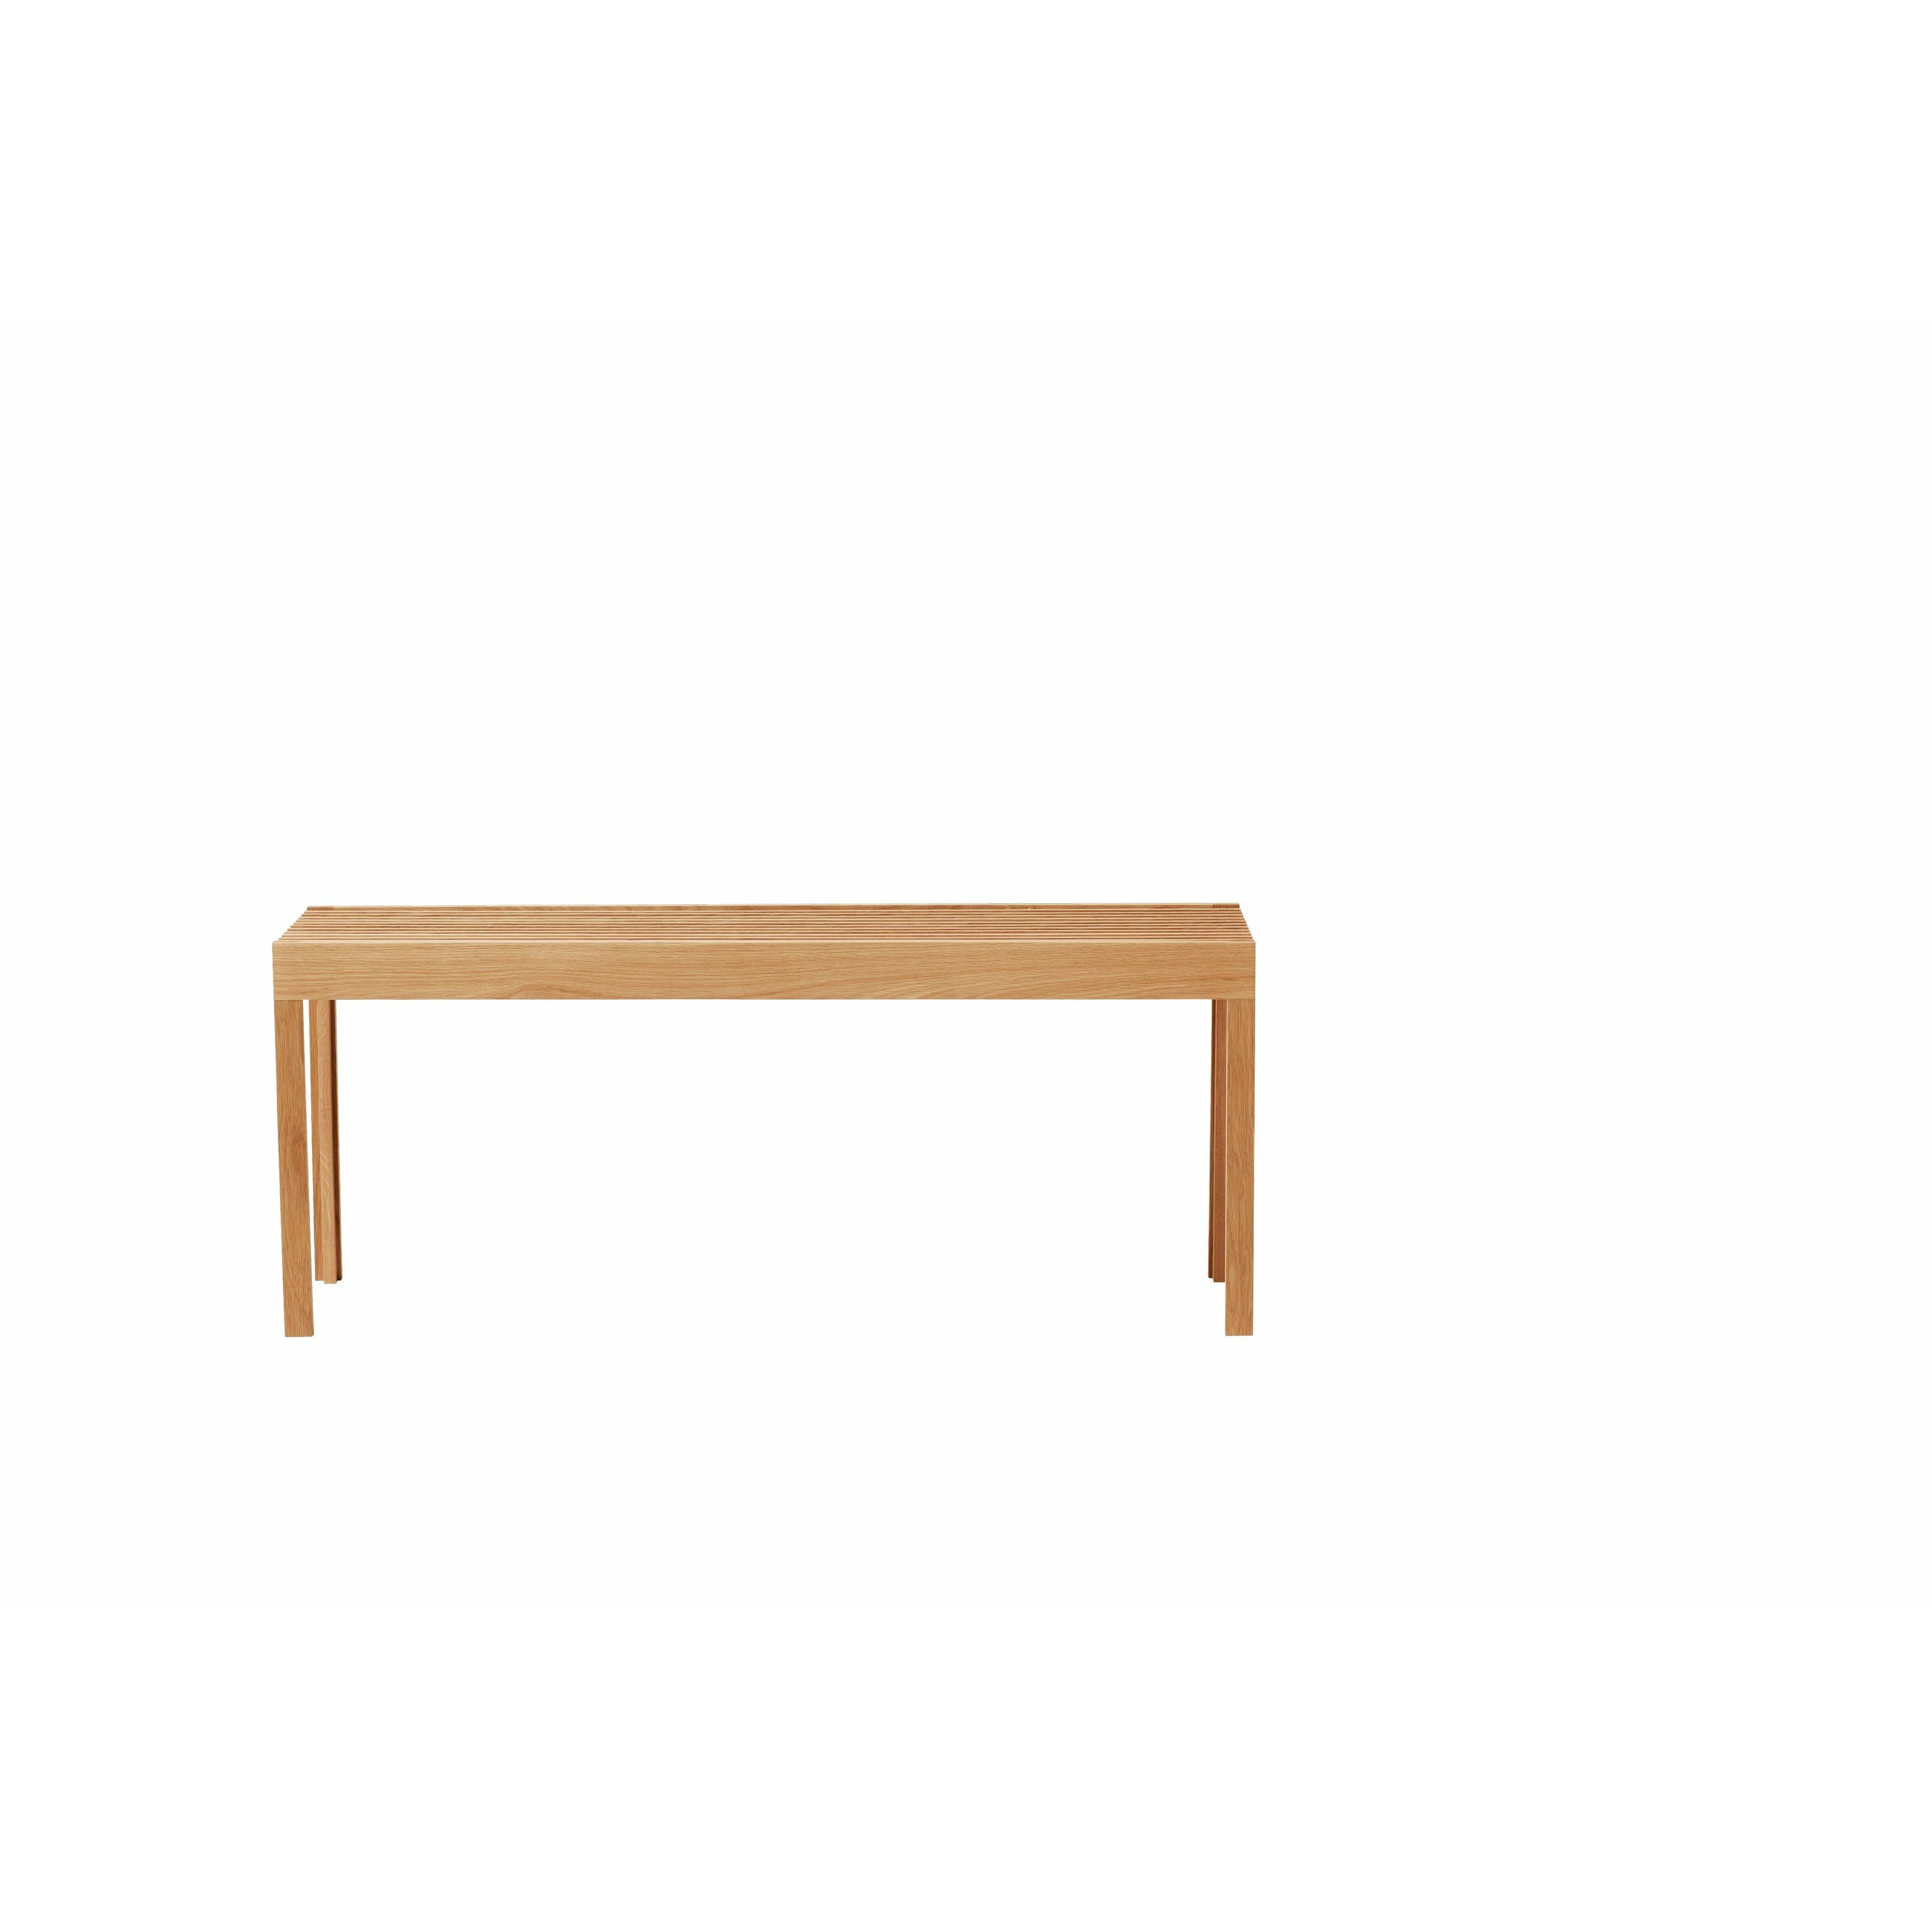 Form & Refine Lightweight Bench. Oak